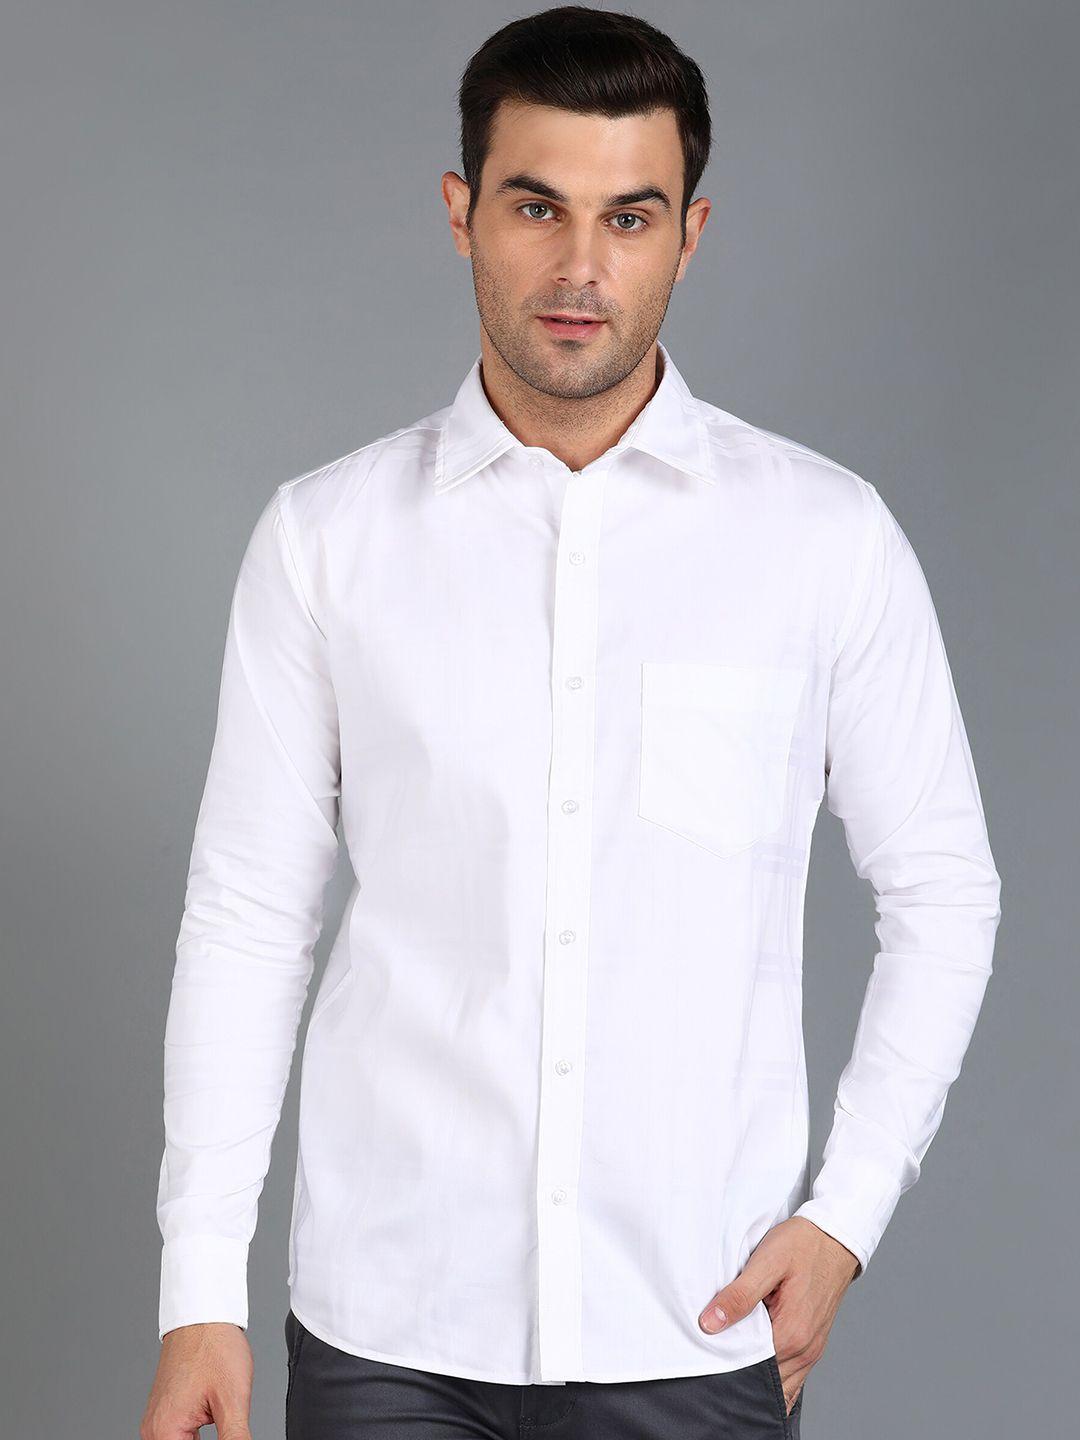 znx clothing men white premium slim fit opaque formal shirt